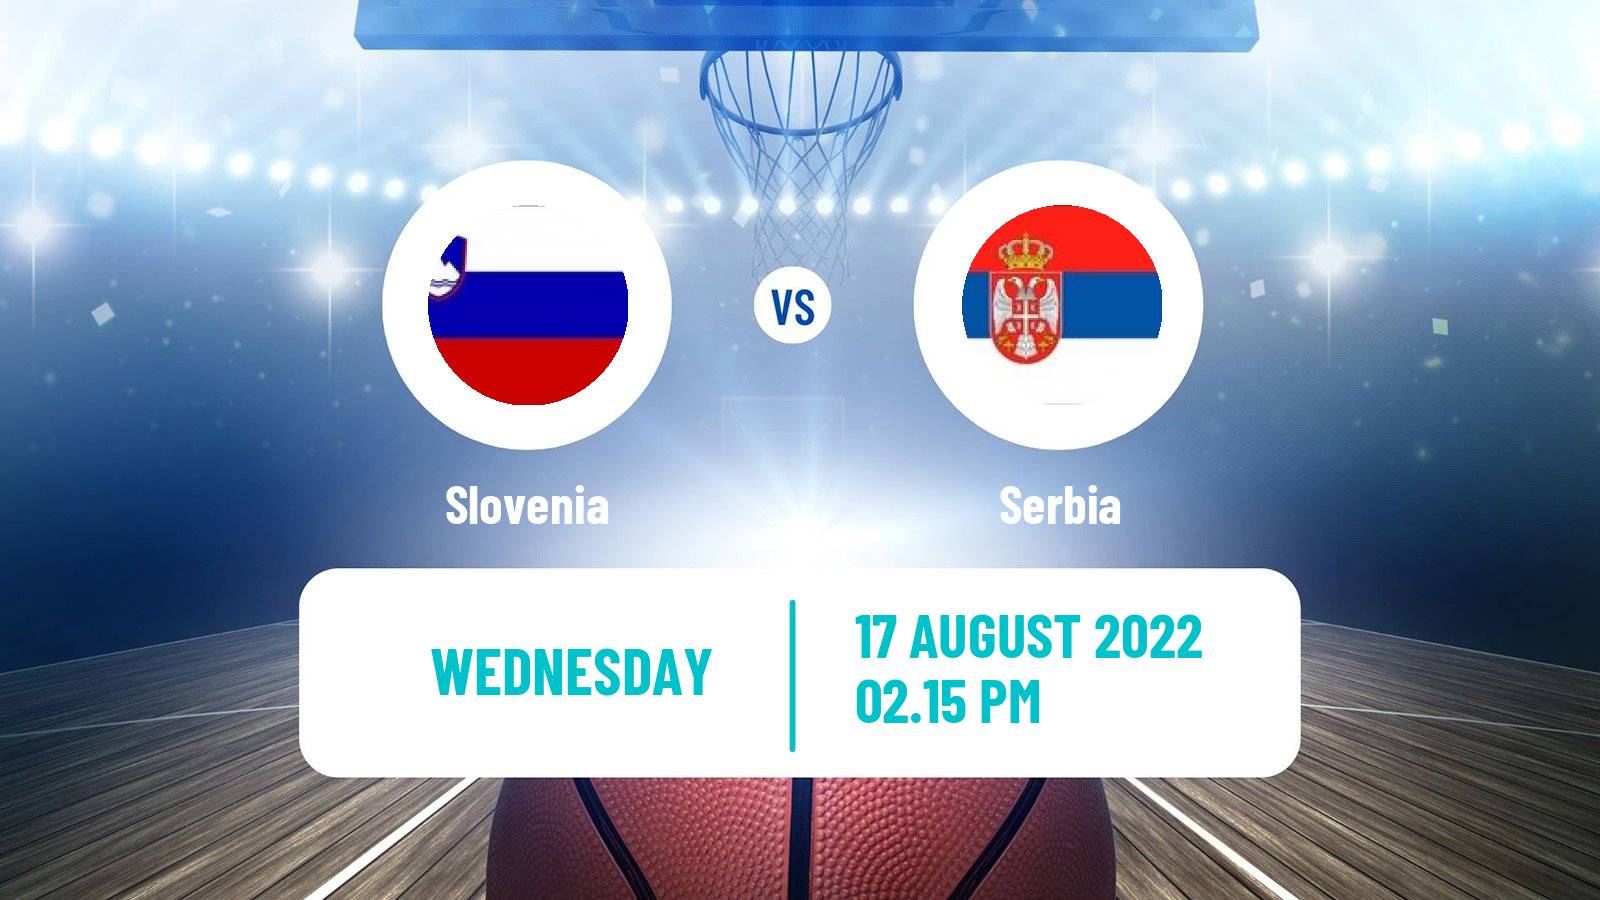 Basketball Club Friendly Basketball Slovenia - Serbia